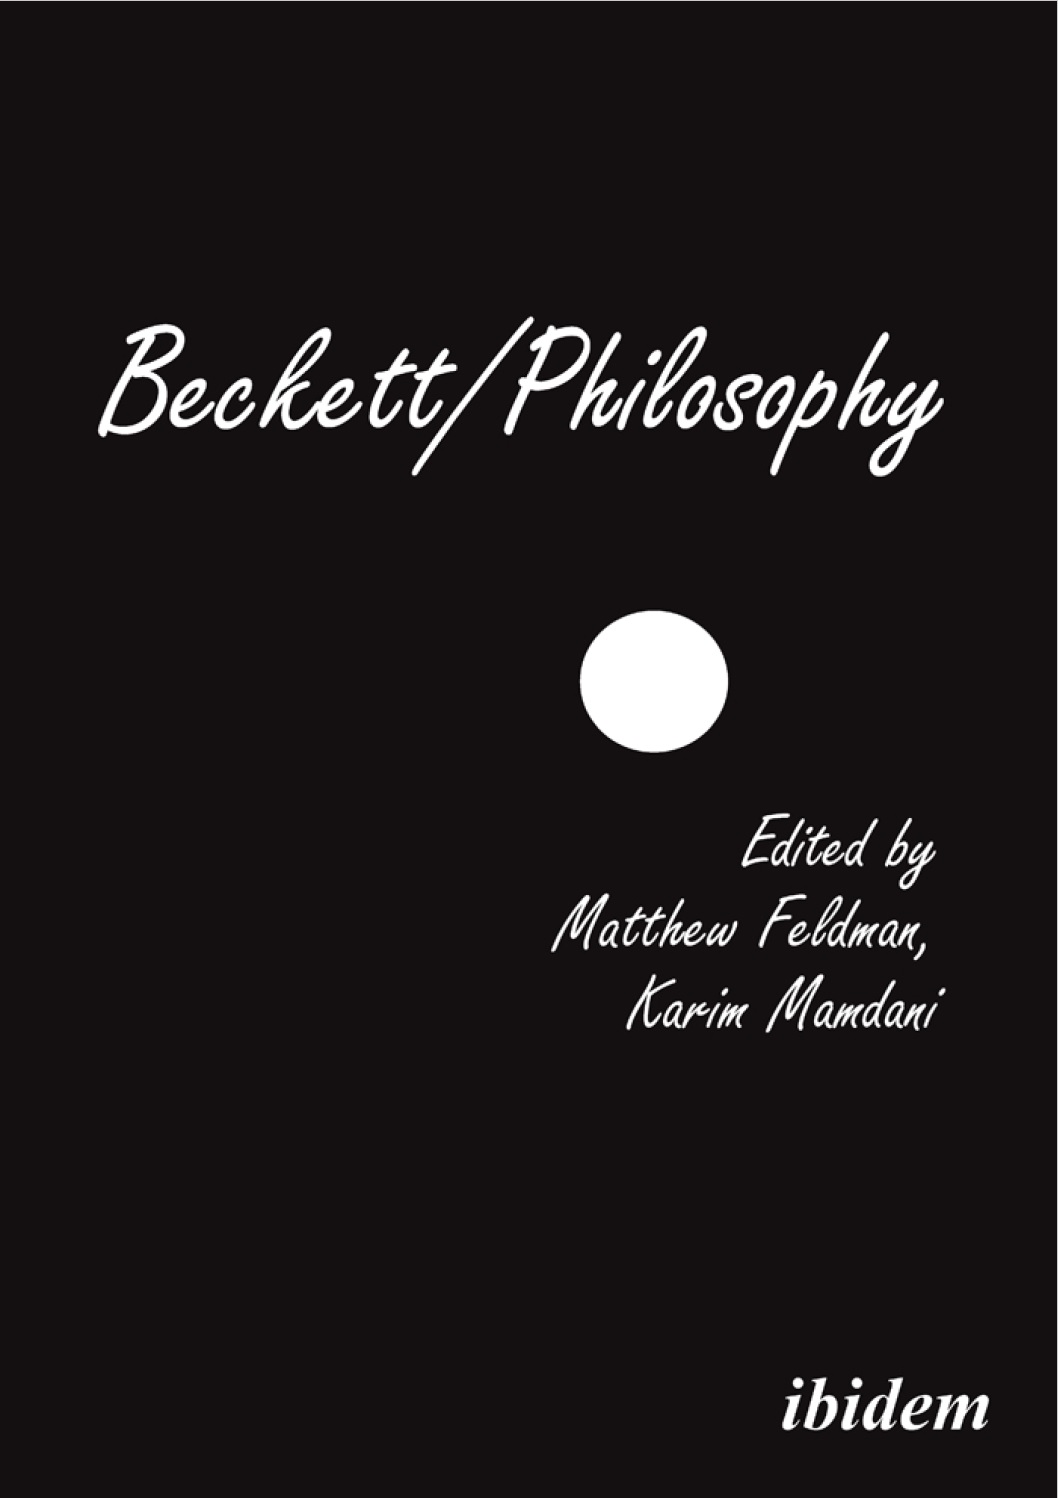 Beckett-philosophy-matthew-feldman-karim-mamdani-theoryleaks.jpg